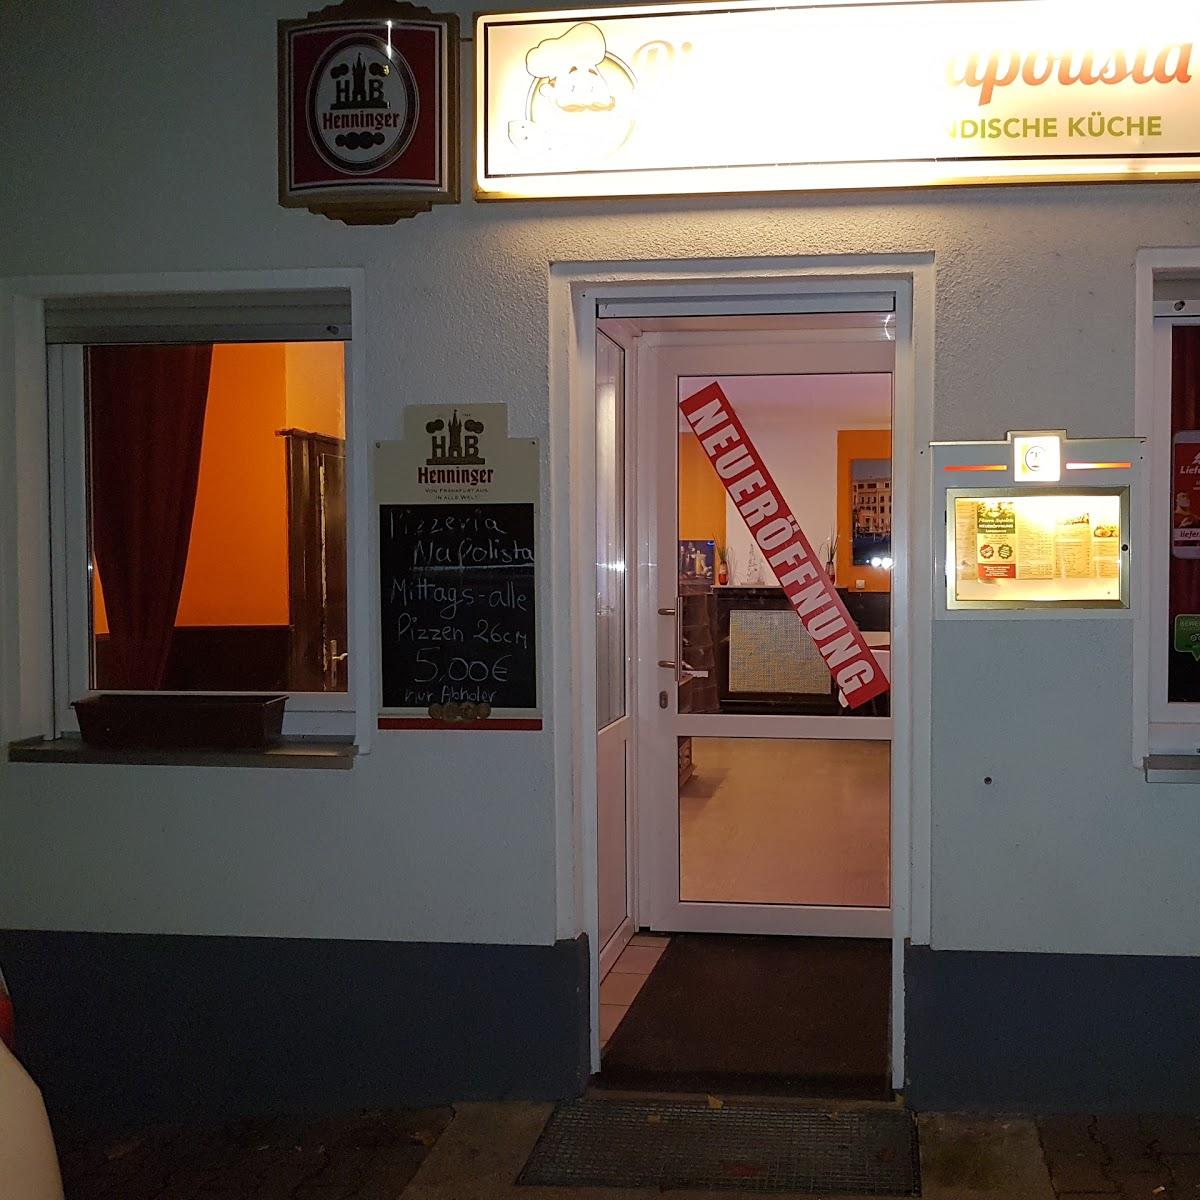 Restaurant "Pizzeria Napolista" in Frankfurt am Main